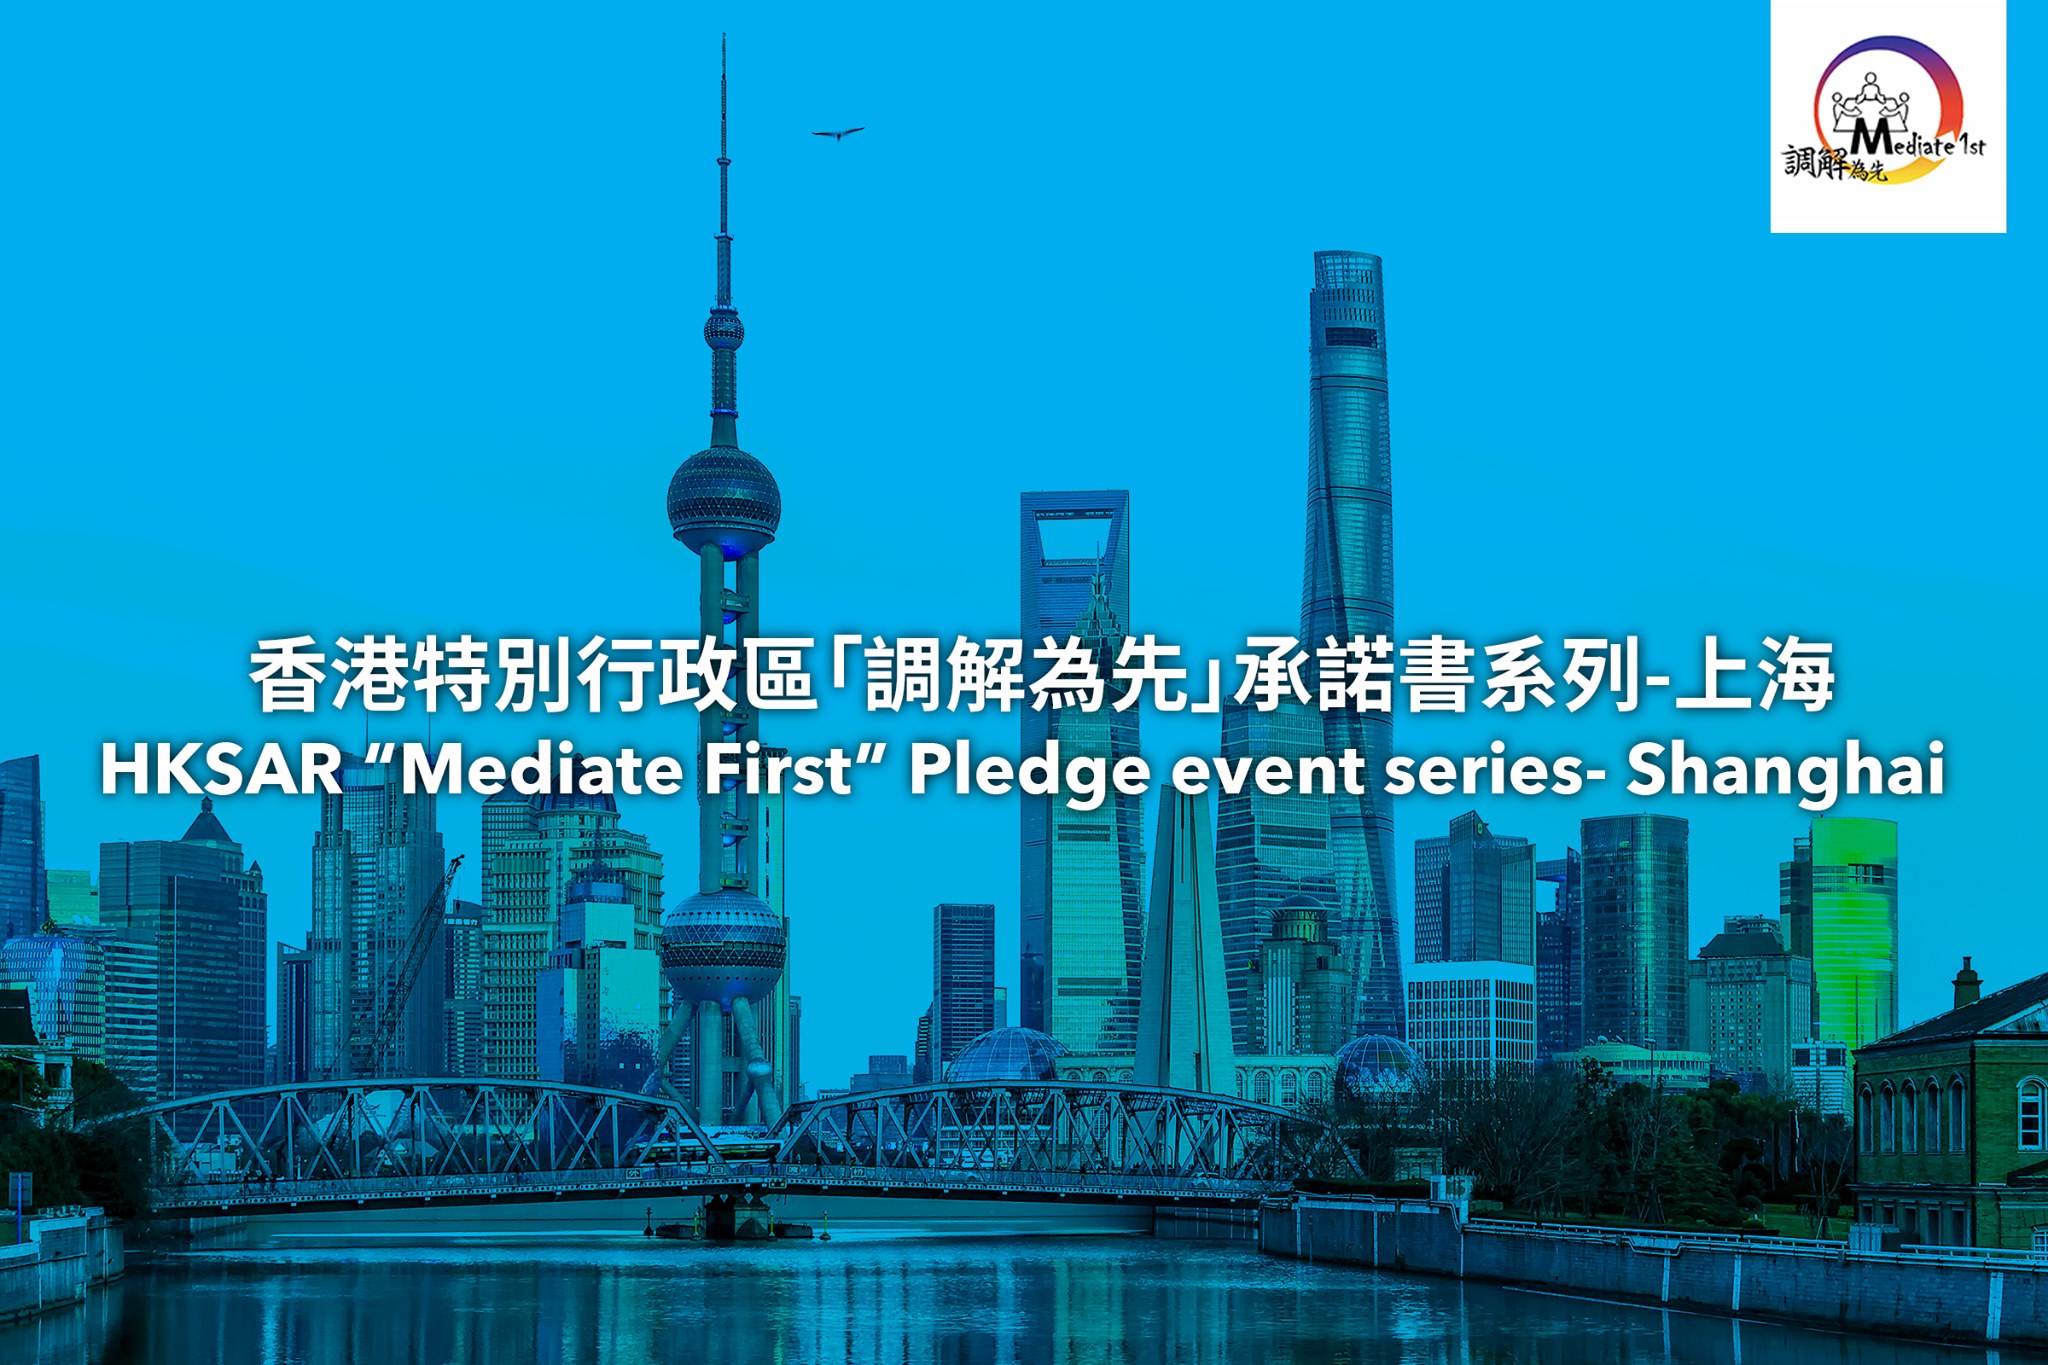 The inaugural “Mediate First” Pledge Event in Shanghai